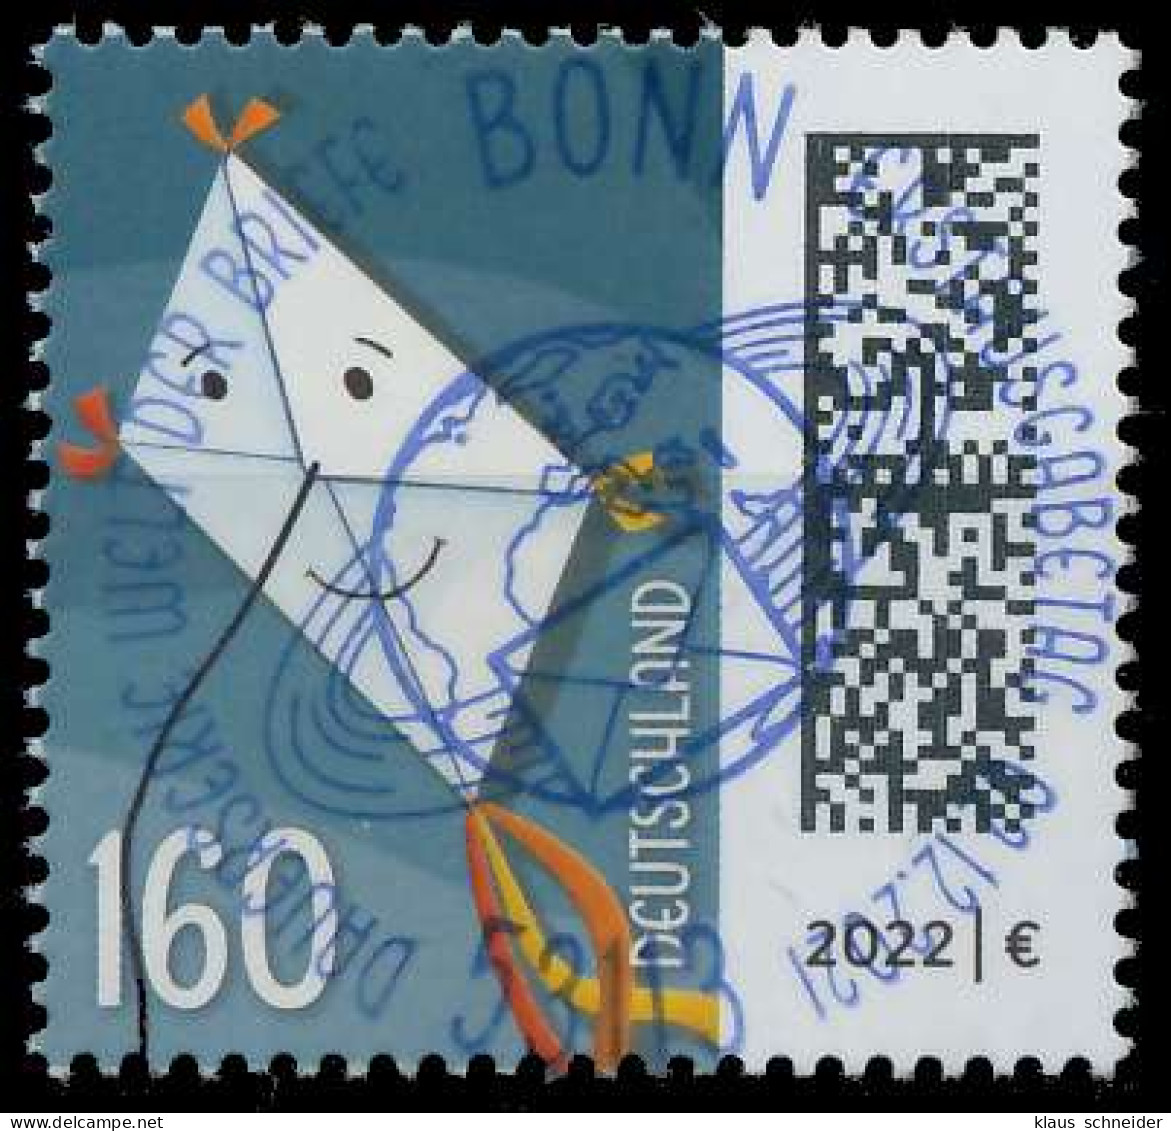 BRD BUND DS WELT DER BRIEFE Nr 3647a ESST ZENTR X525786 - Used Stamps